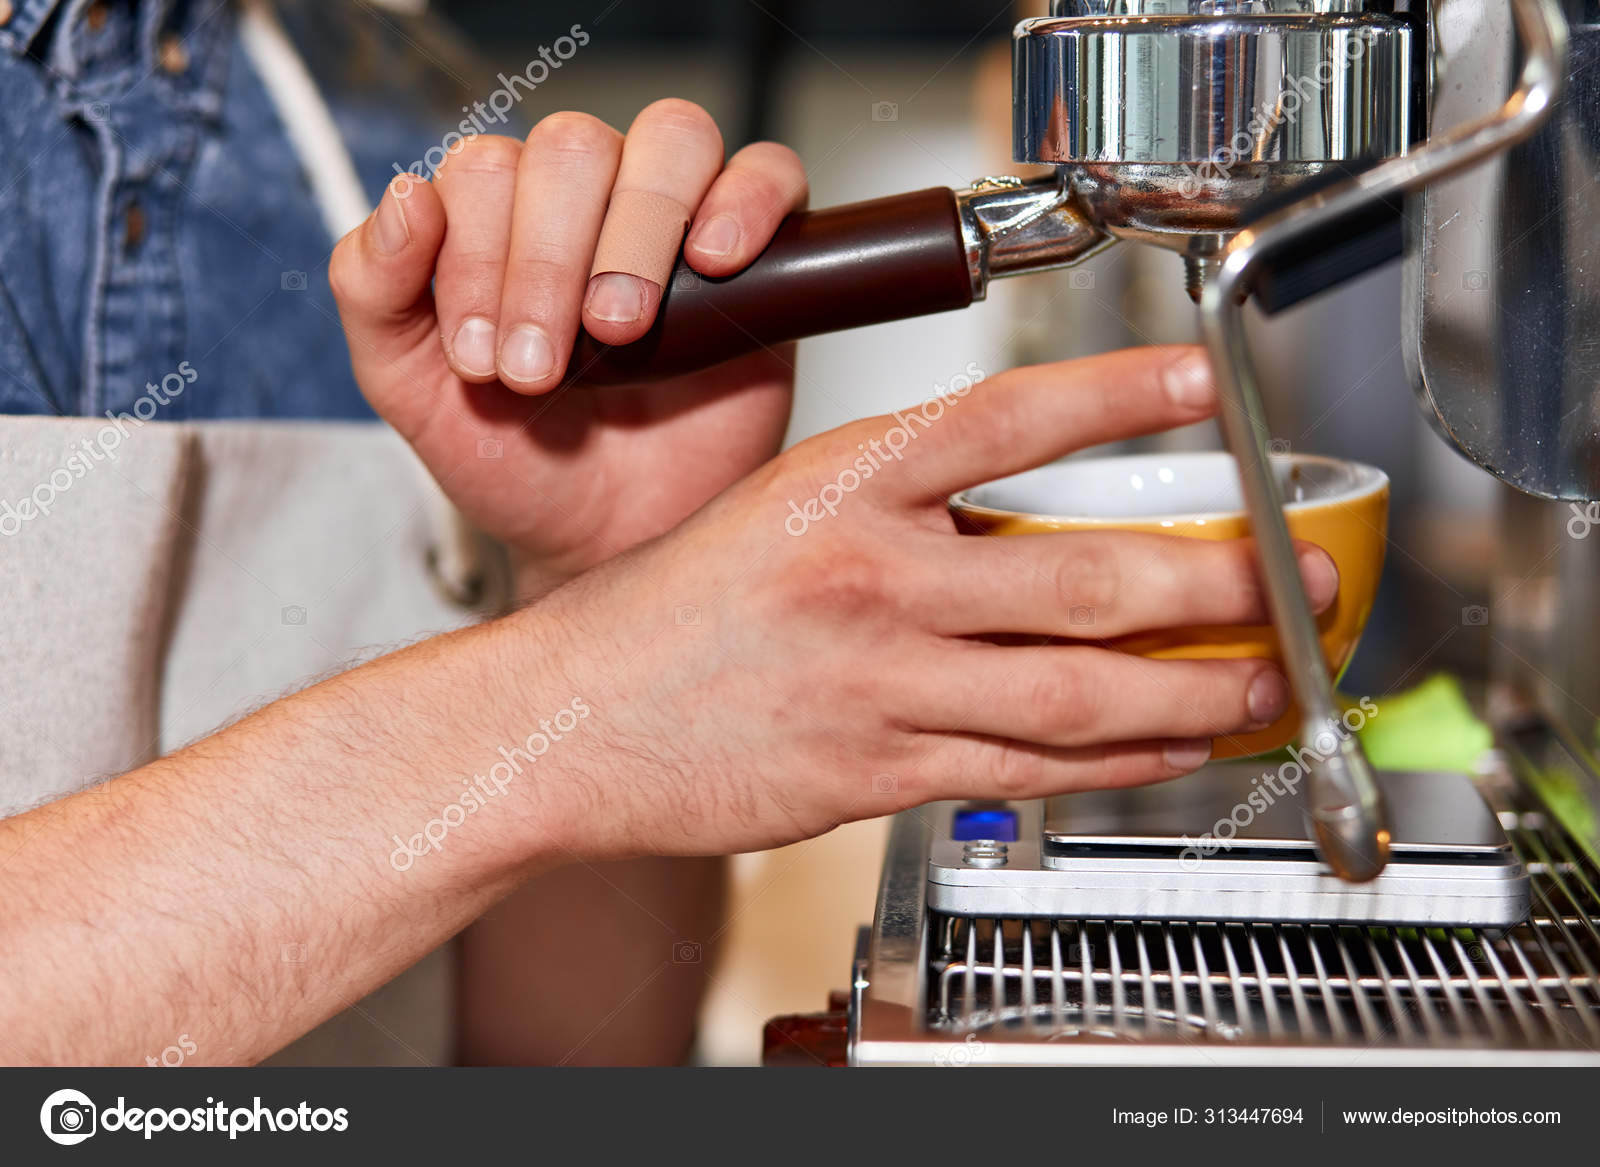 https://st4.depositphotos.com/13768208/31344/i/1600/depositphotos_313447694-stock-photo-handsome-barman-preparing-ground-coffee.jpg